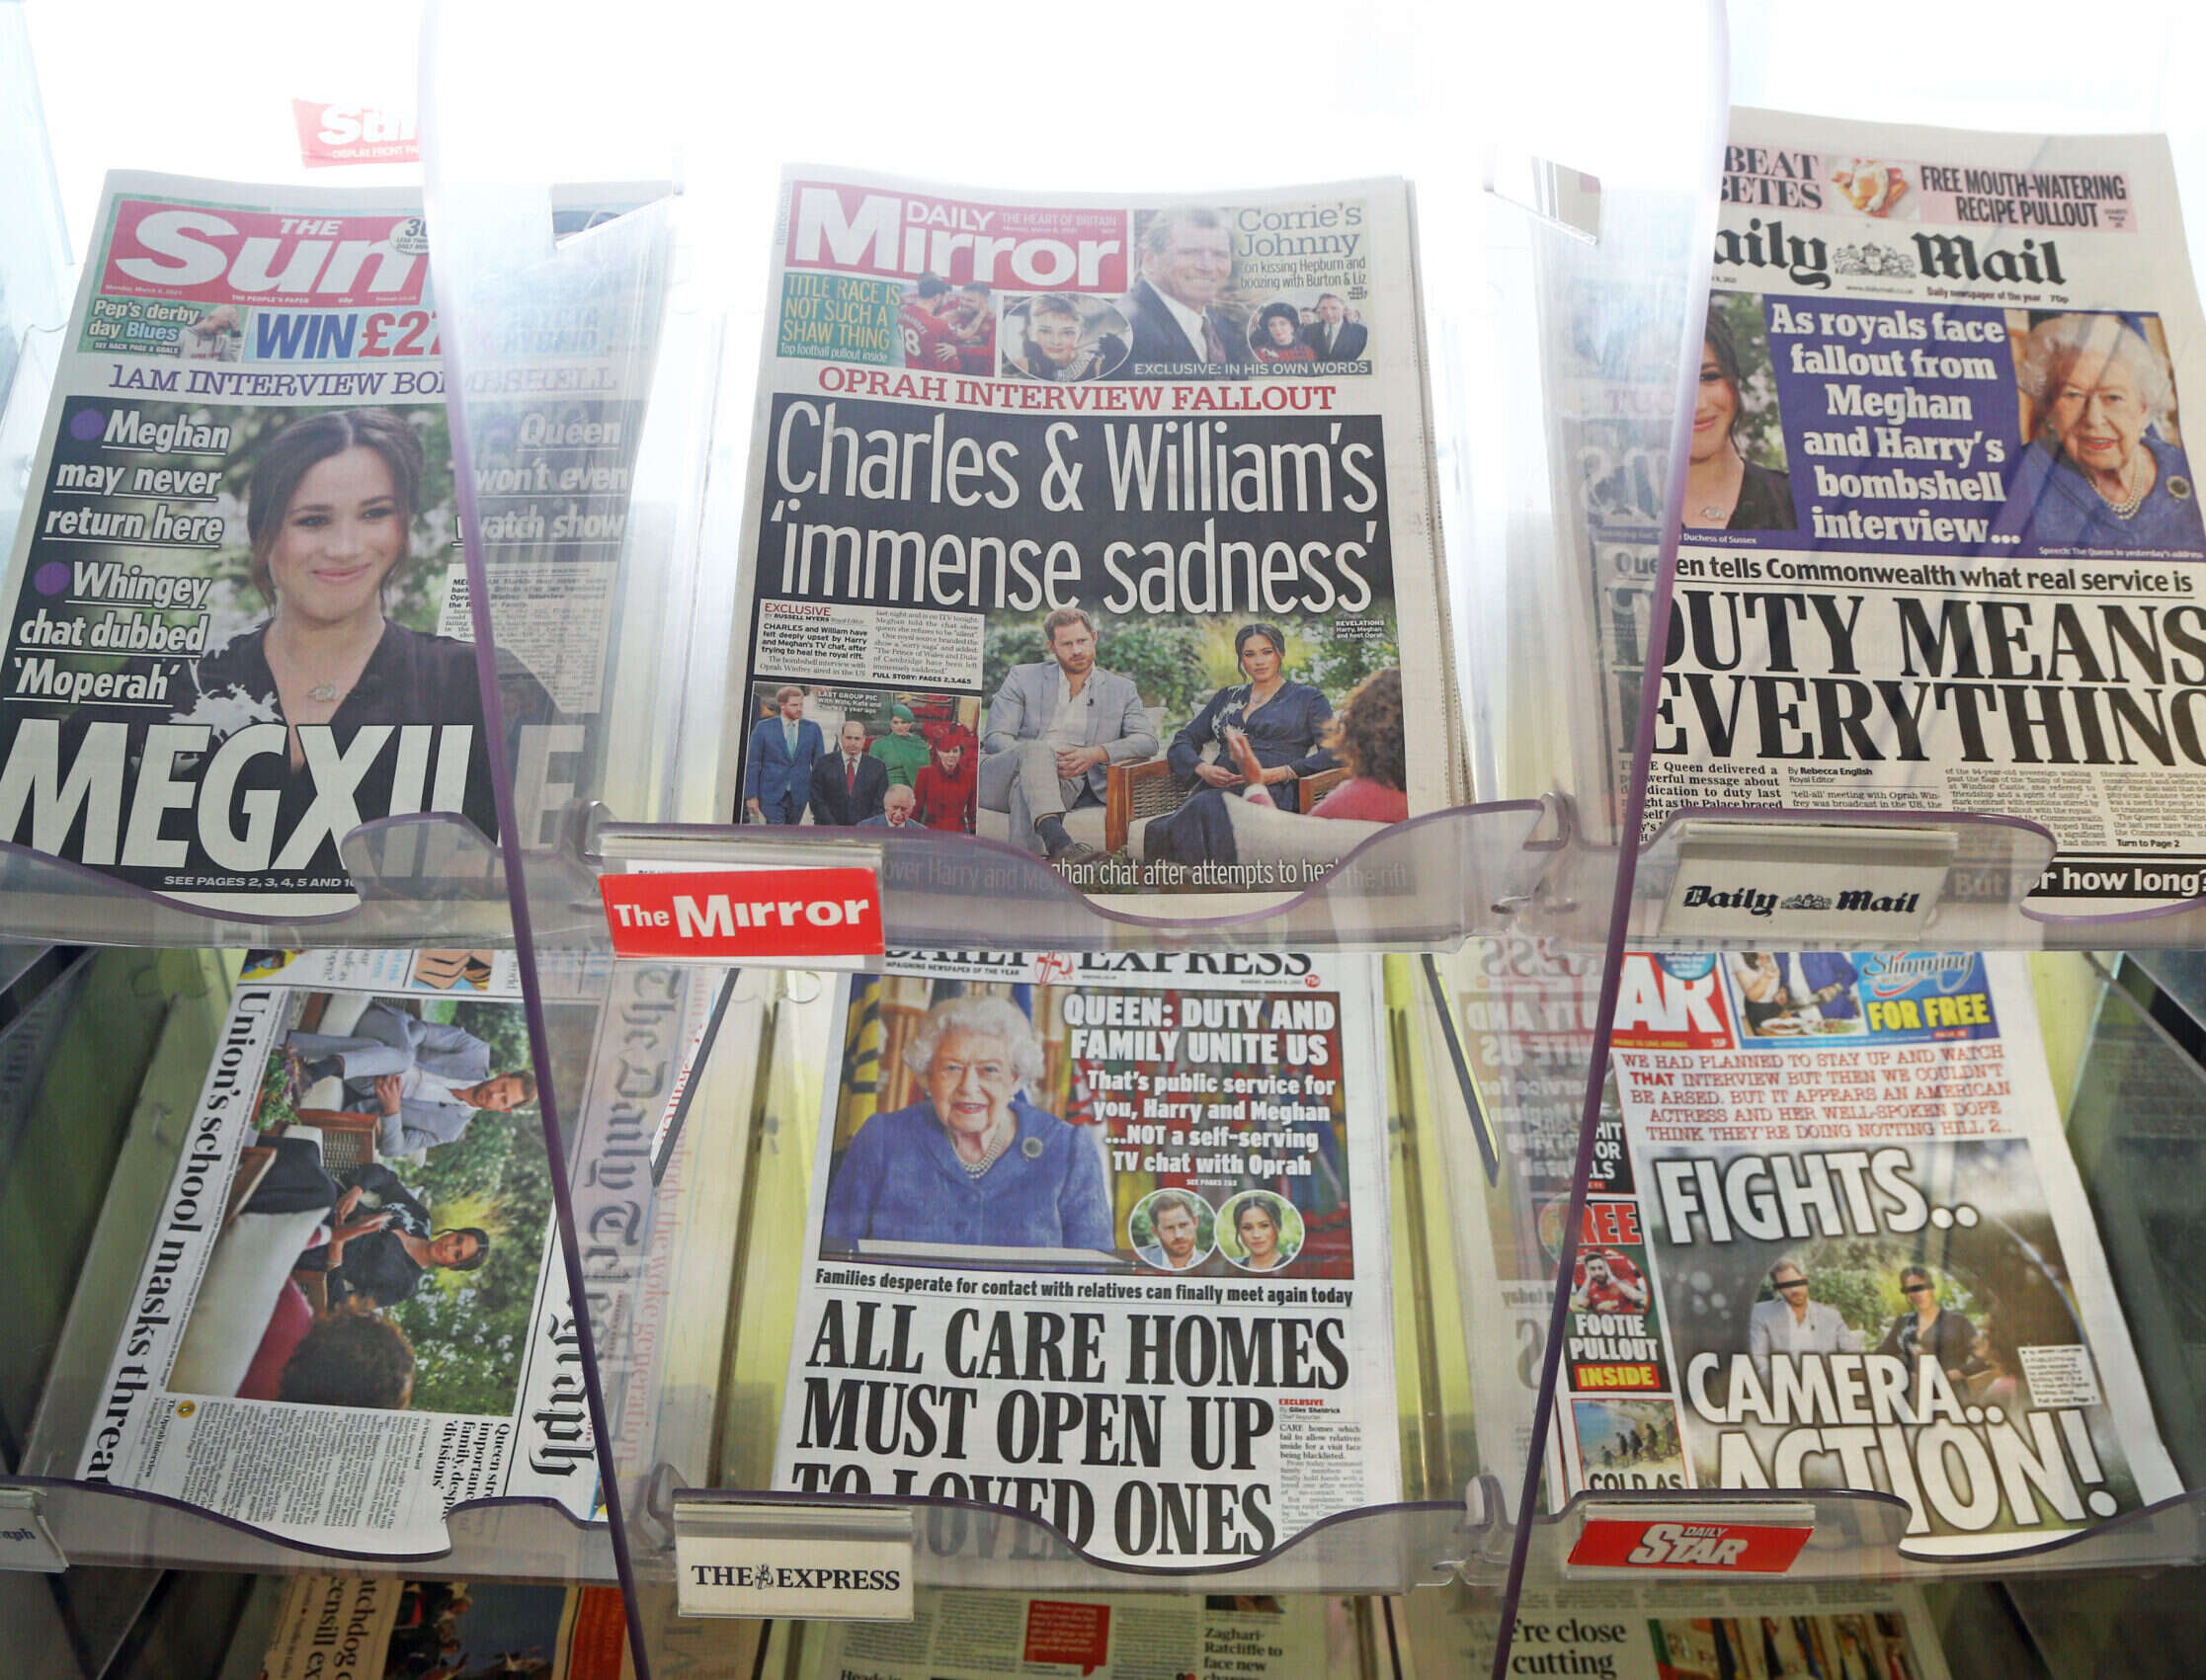 Society of Editors boss Ian Murray resigns amid row over Prince Harry 'bigoted' press claims